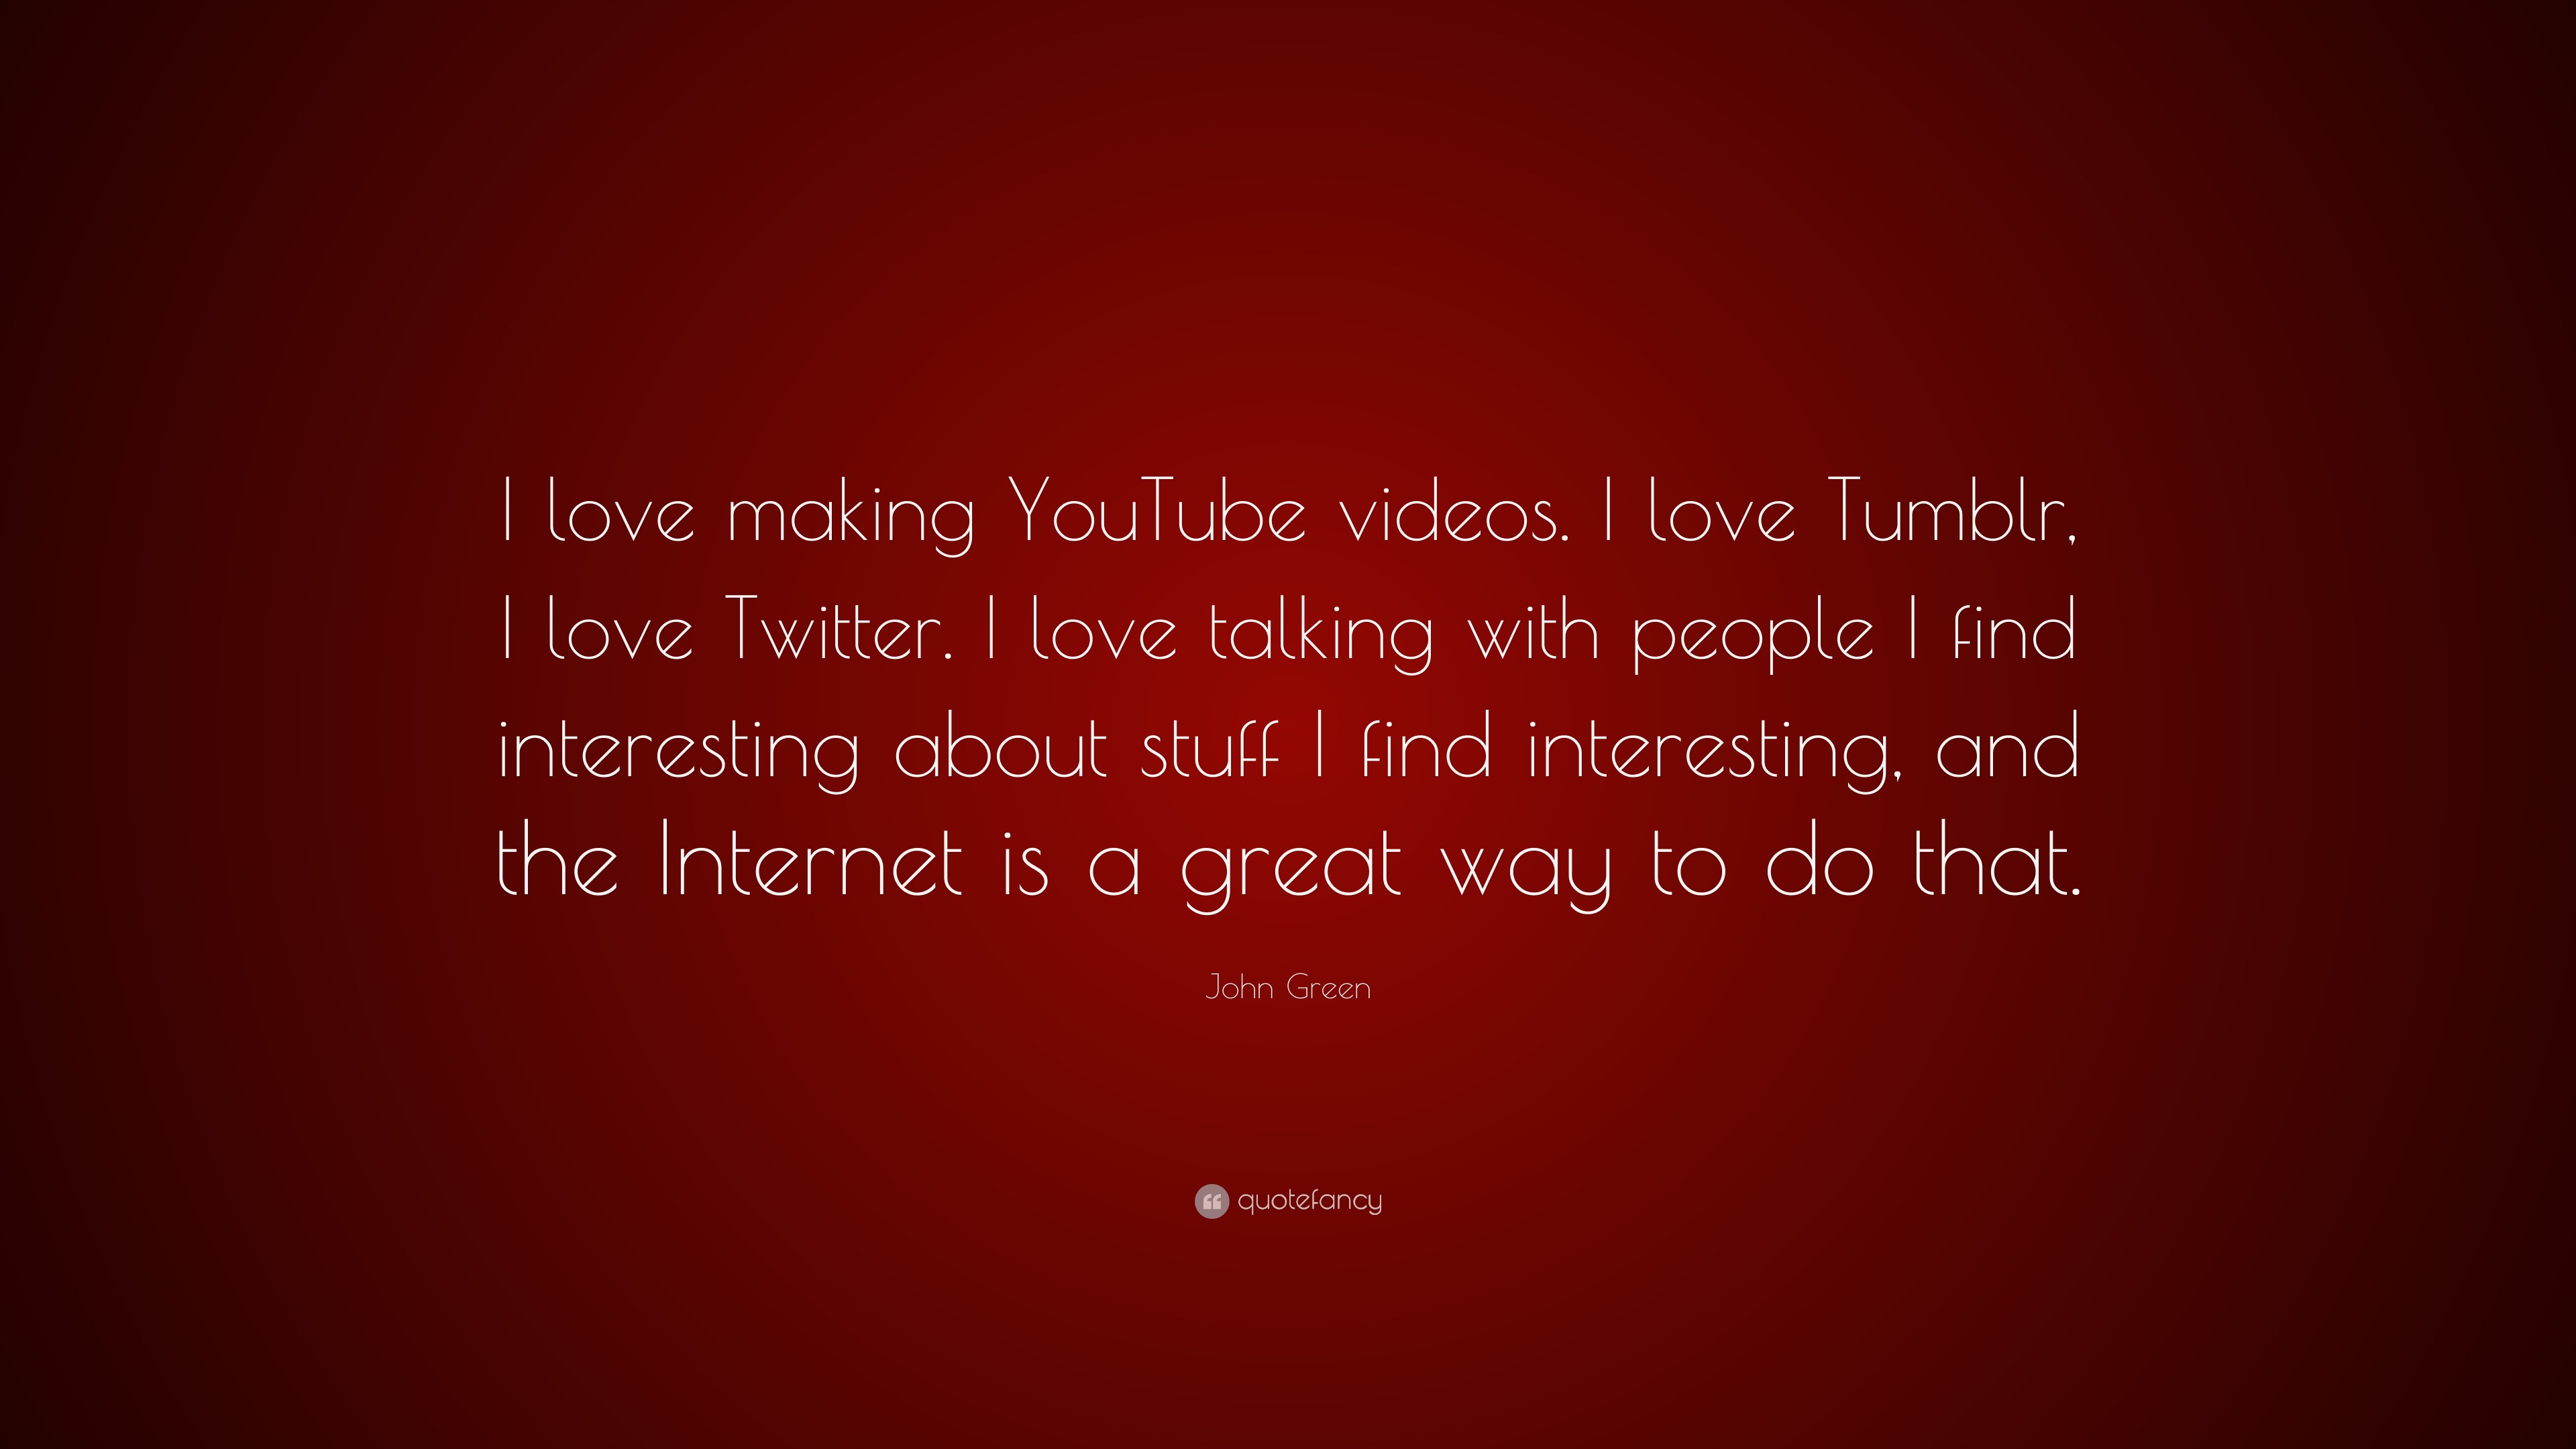 John Green Quote “i Love Making Youtube Videos I Love Tumblr I Love Twitter I Love Talking